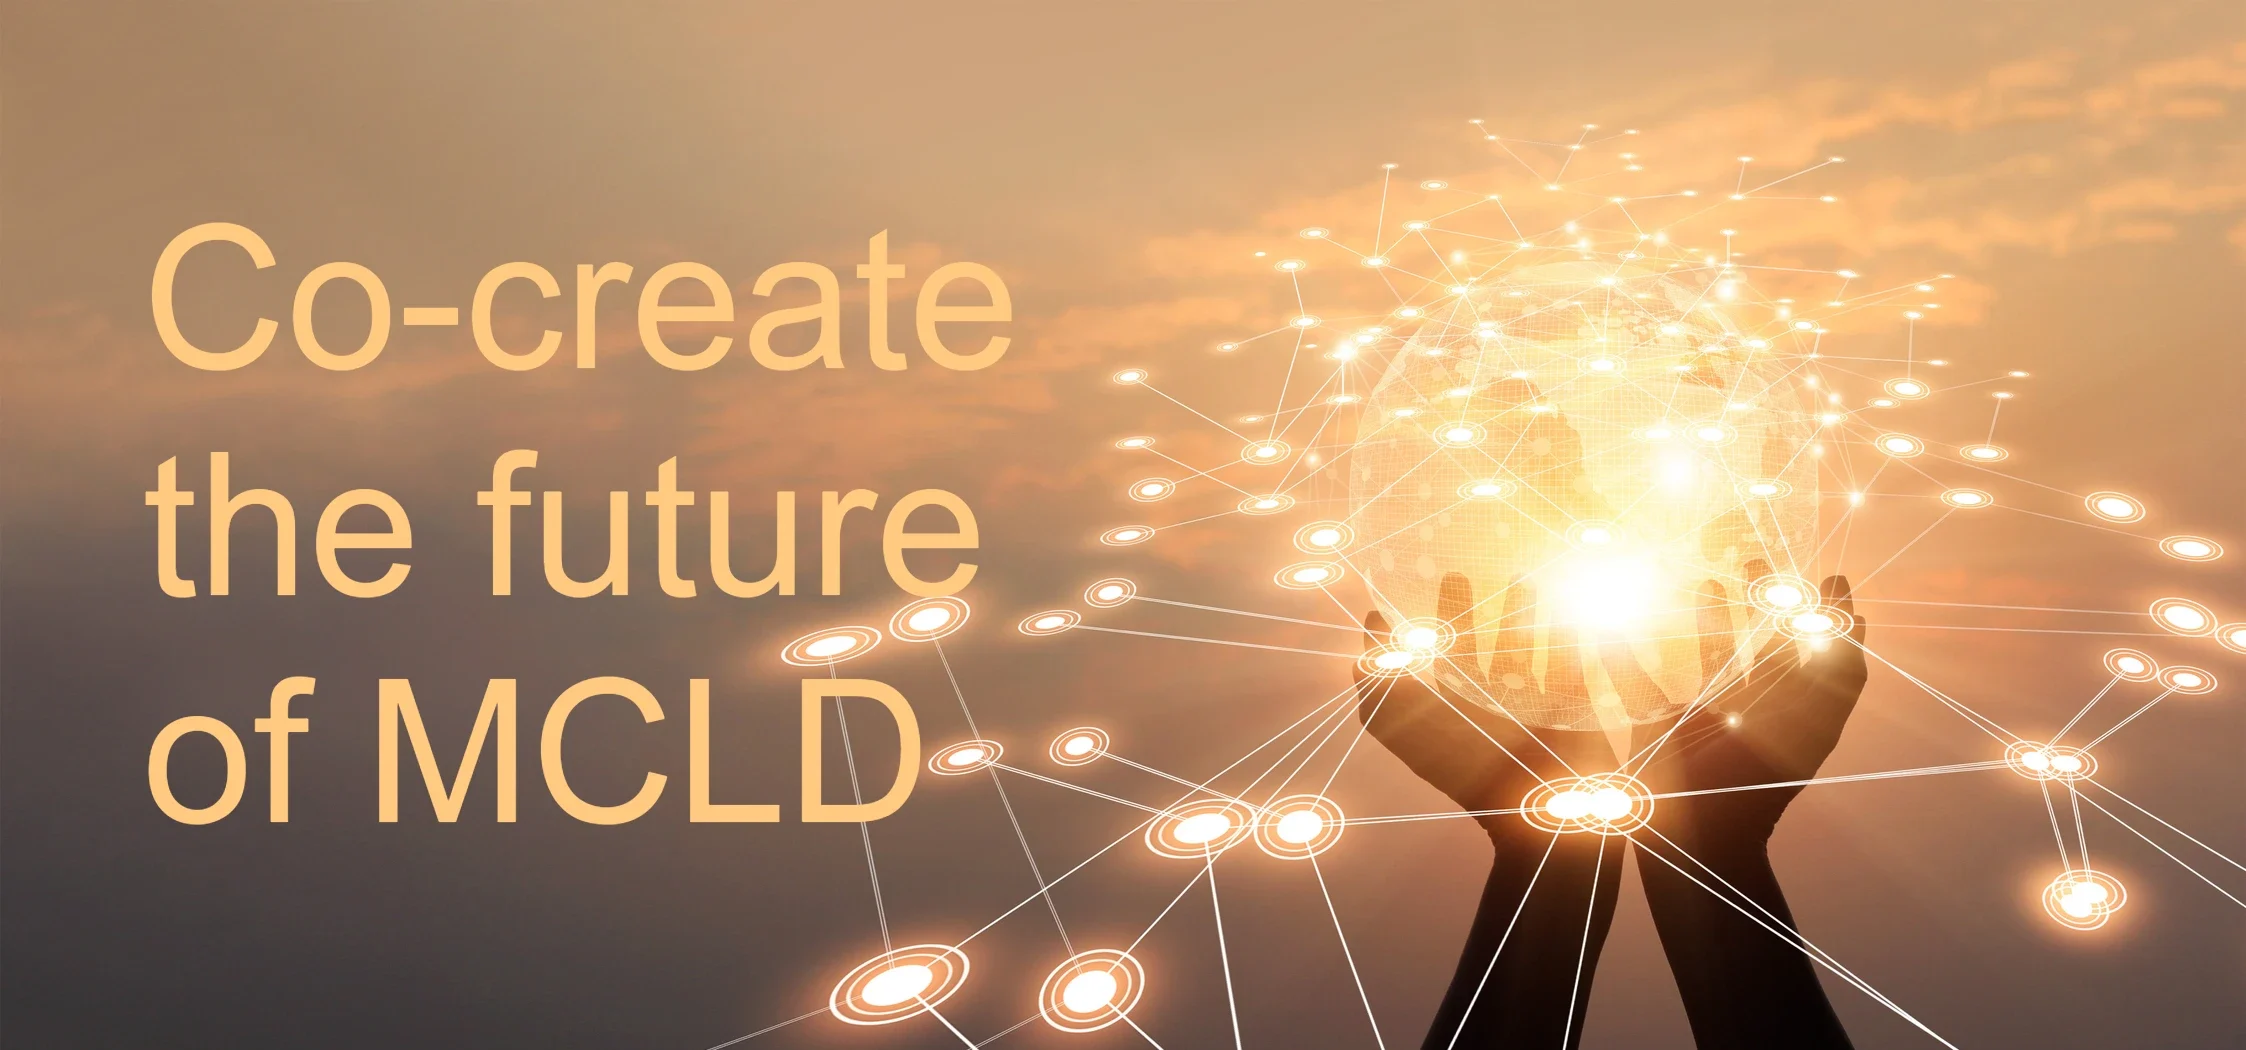 Co-creating the future of MCLD — November 30, 2022 Global Zoom Call